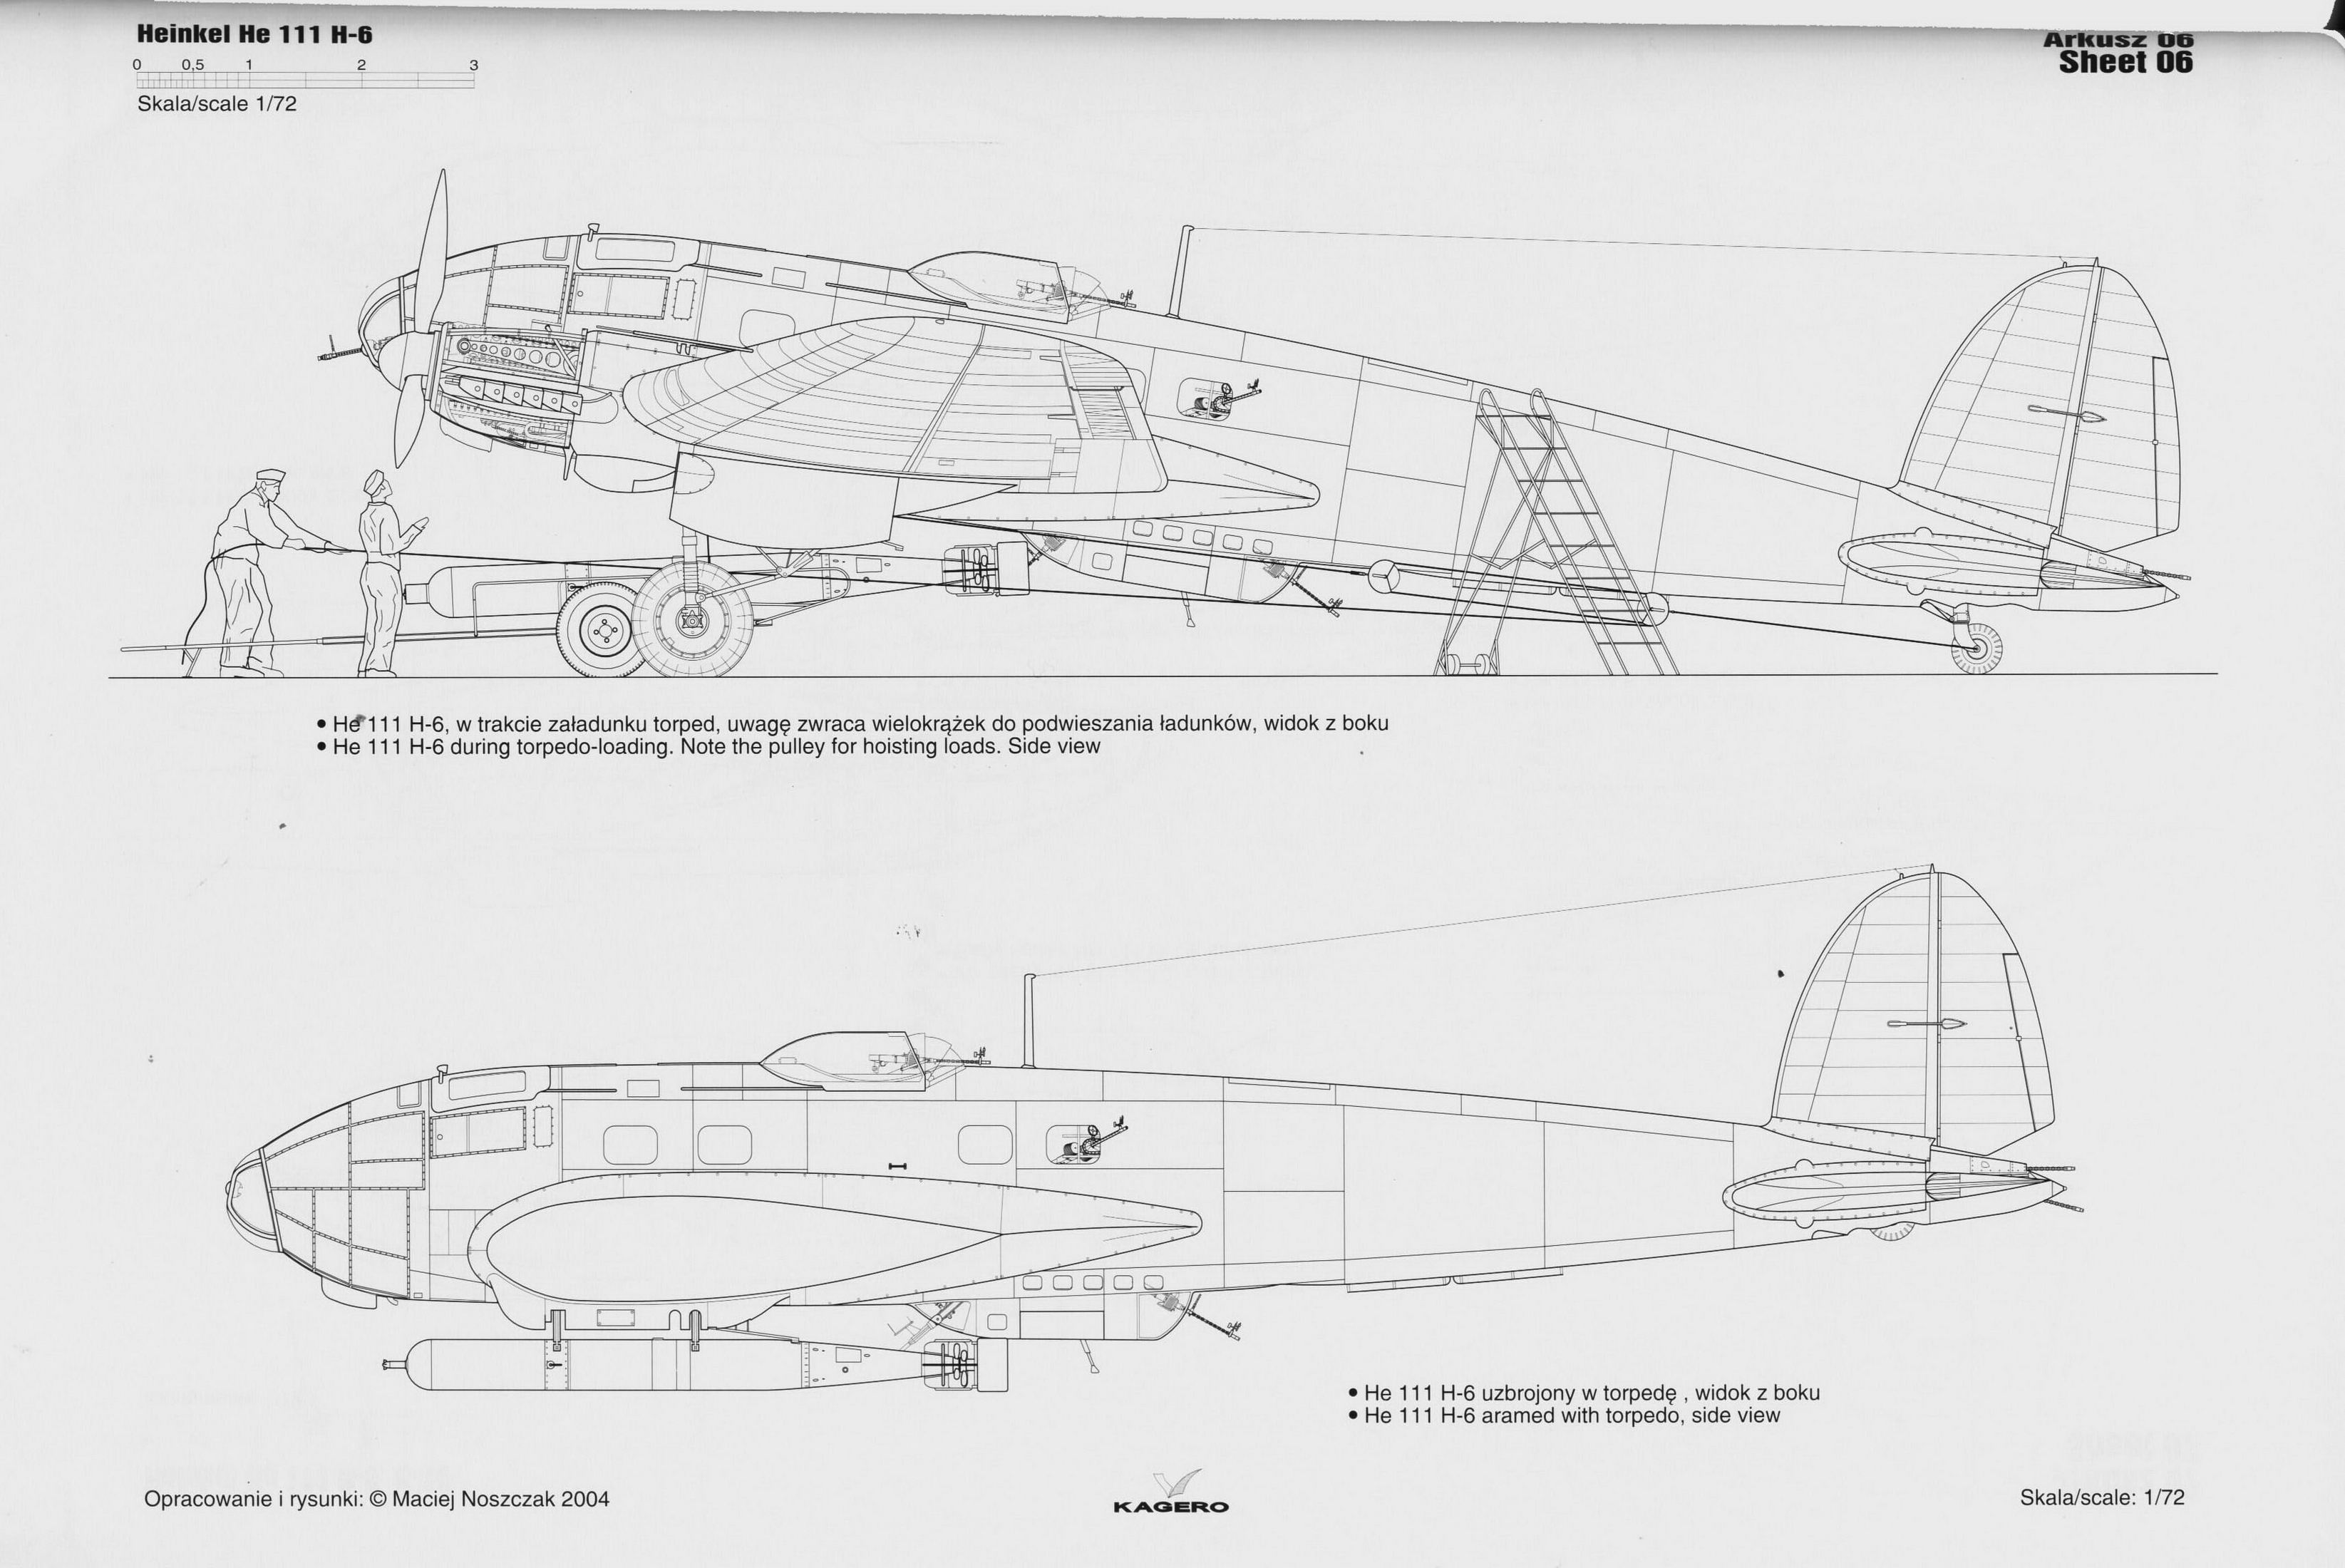 Artwork line drawing or blue print of a Heinkel He 111H6 scale 1 72 Arkusz 02